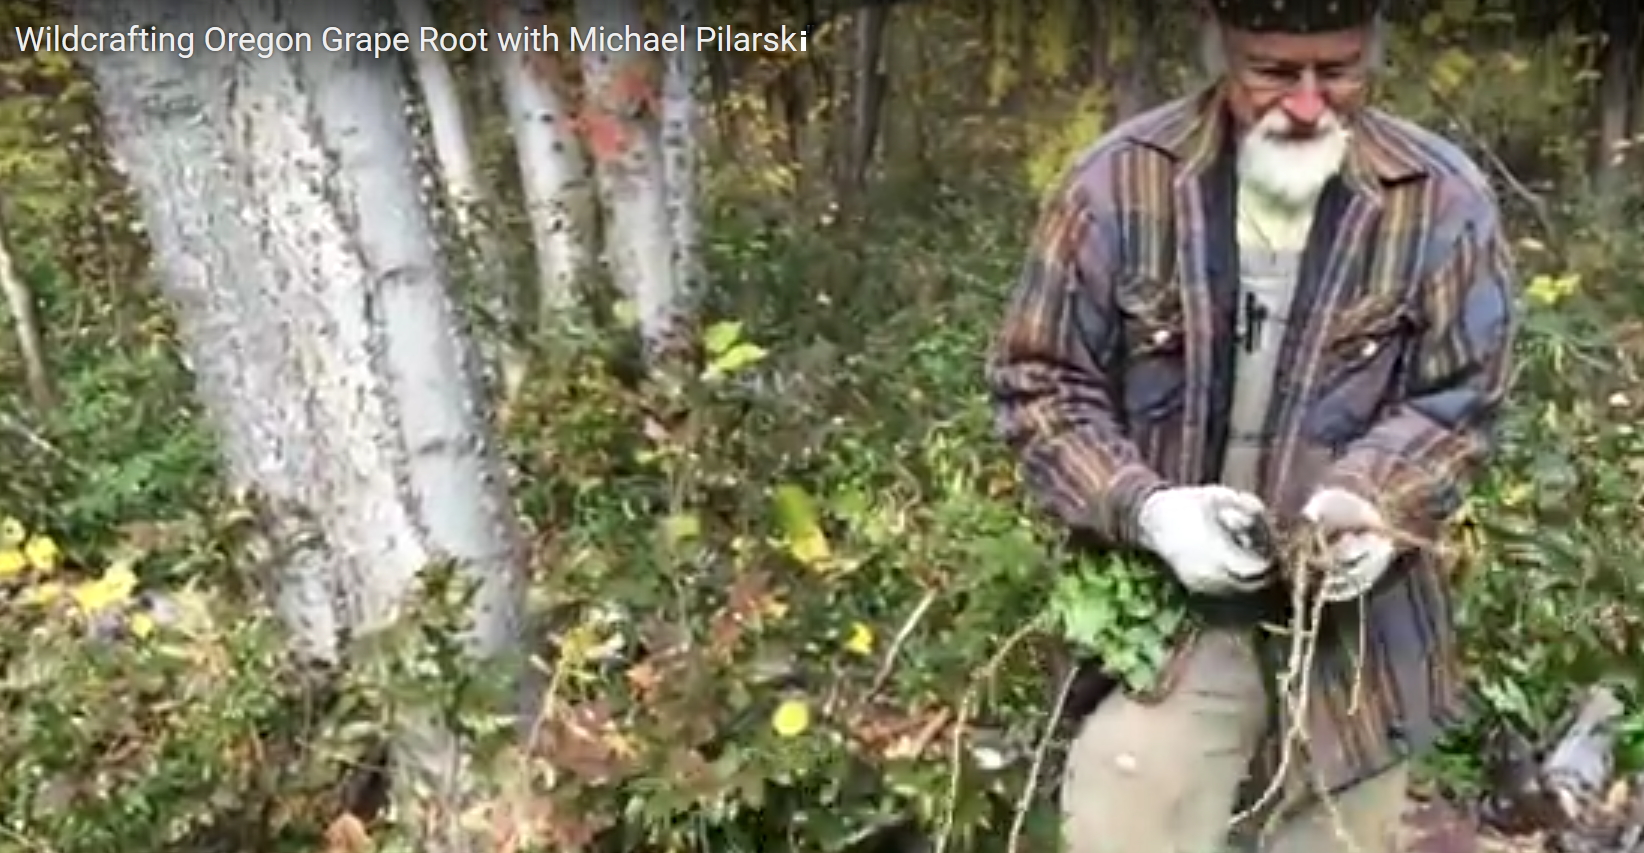 Michael Pilarski in the woods wildcrafting.